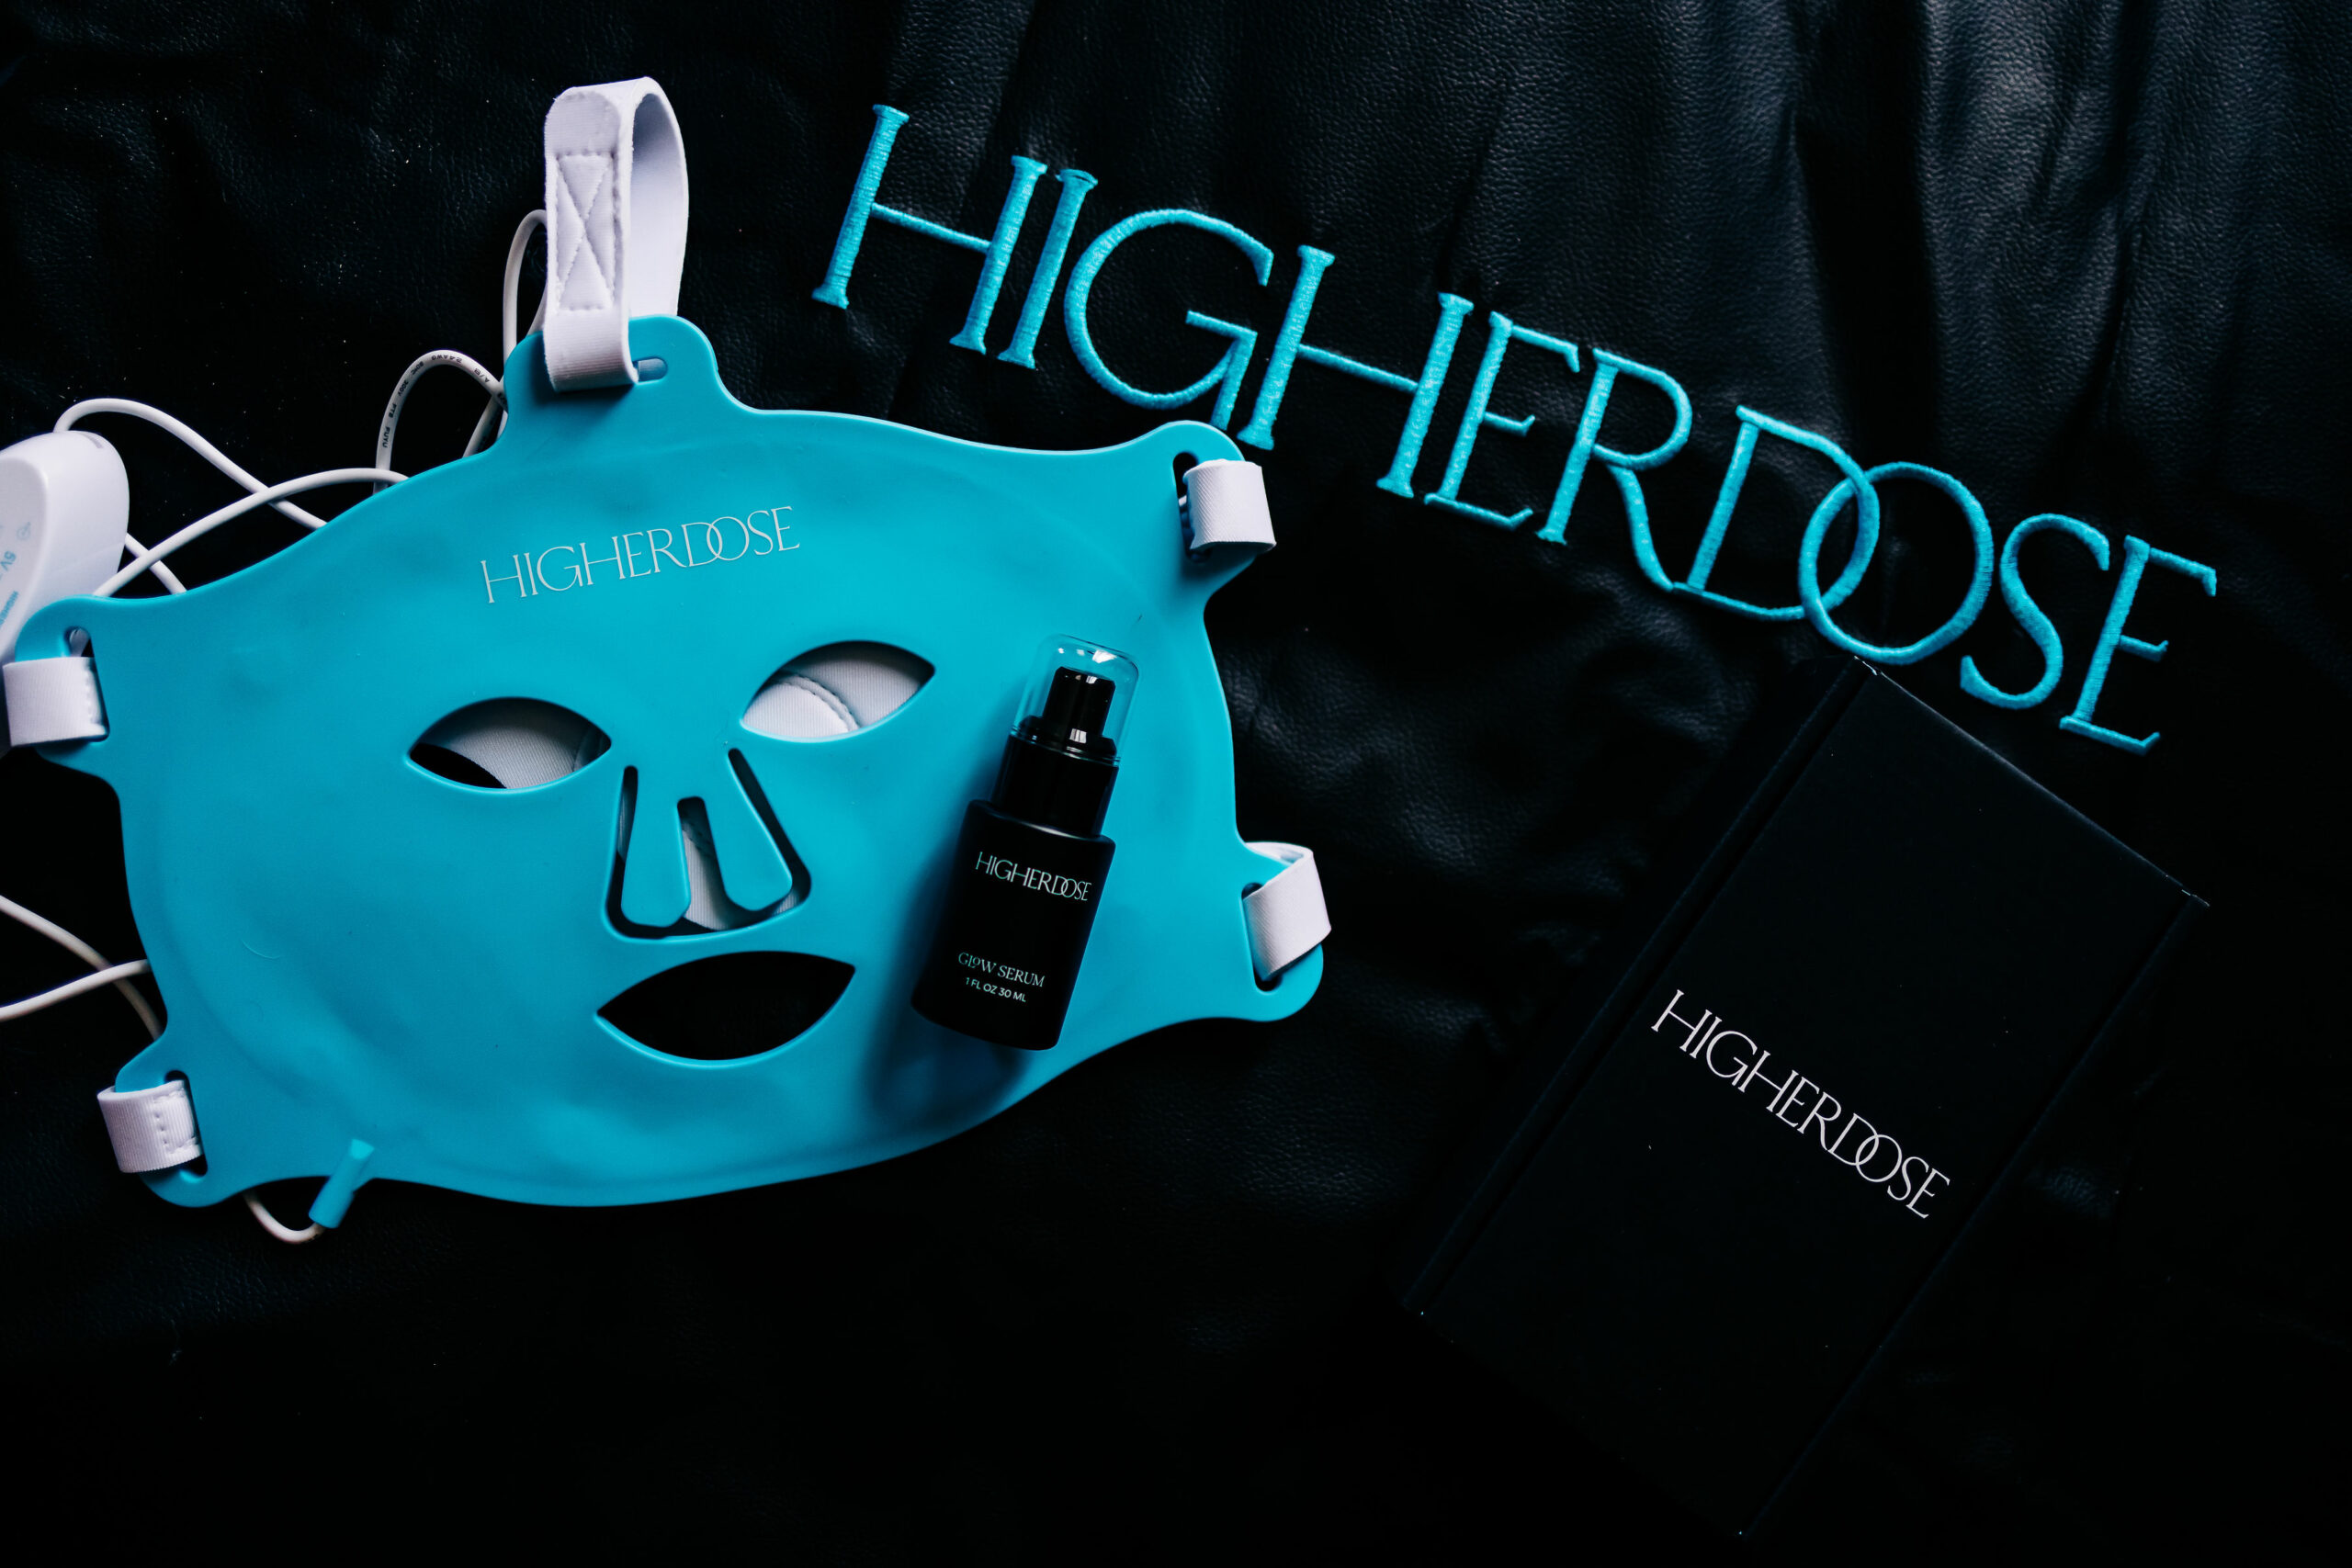 HigherDOSE Mask